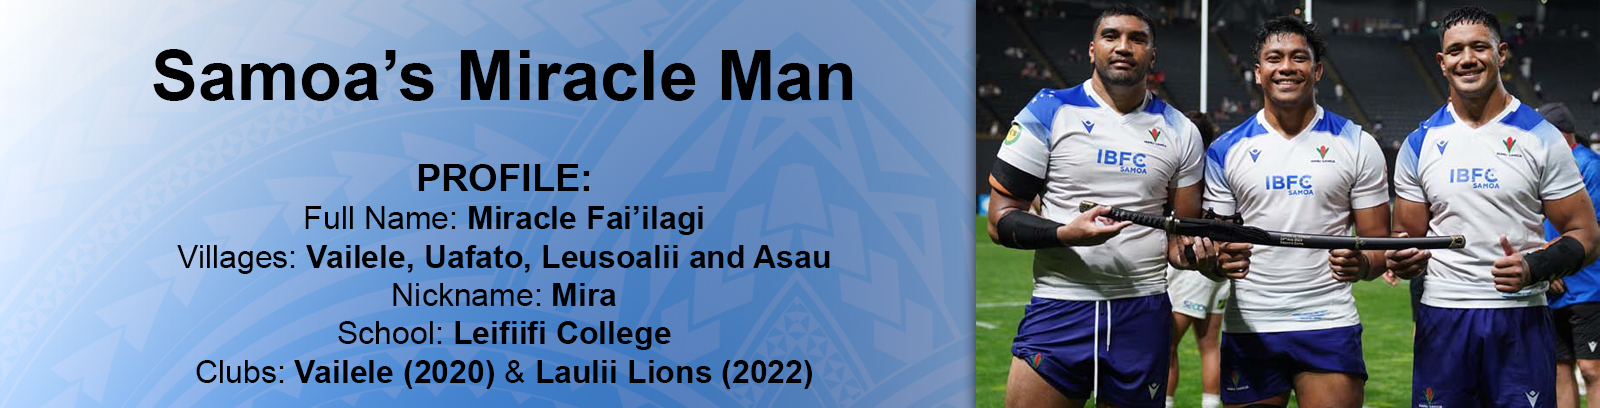 Article - 2 Samoa's Miracle Man